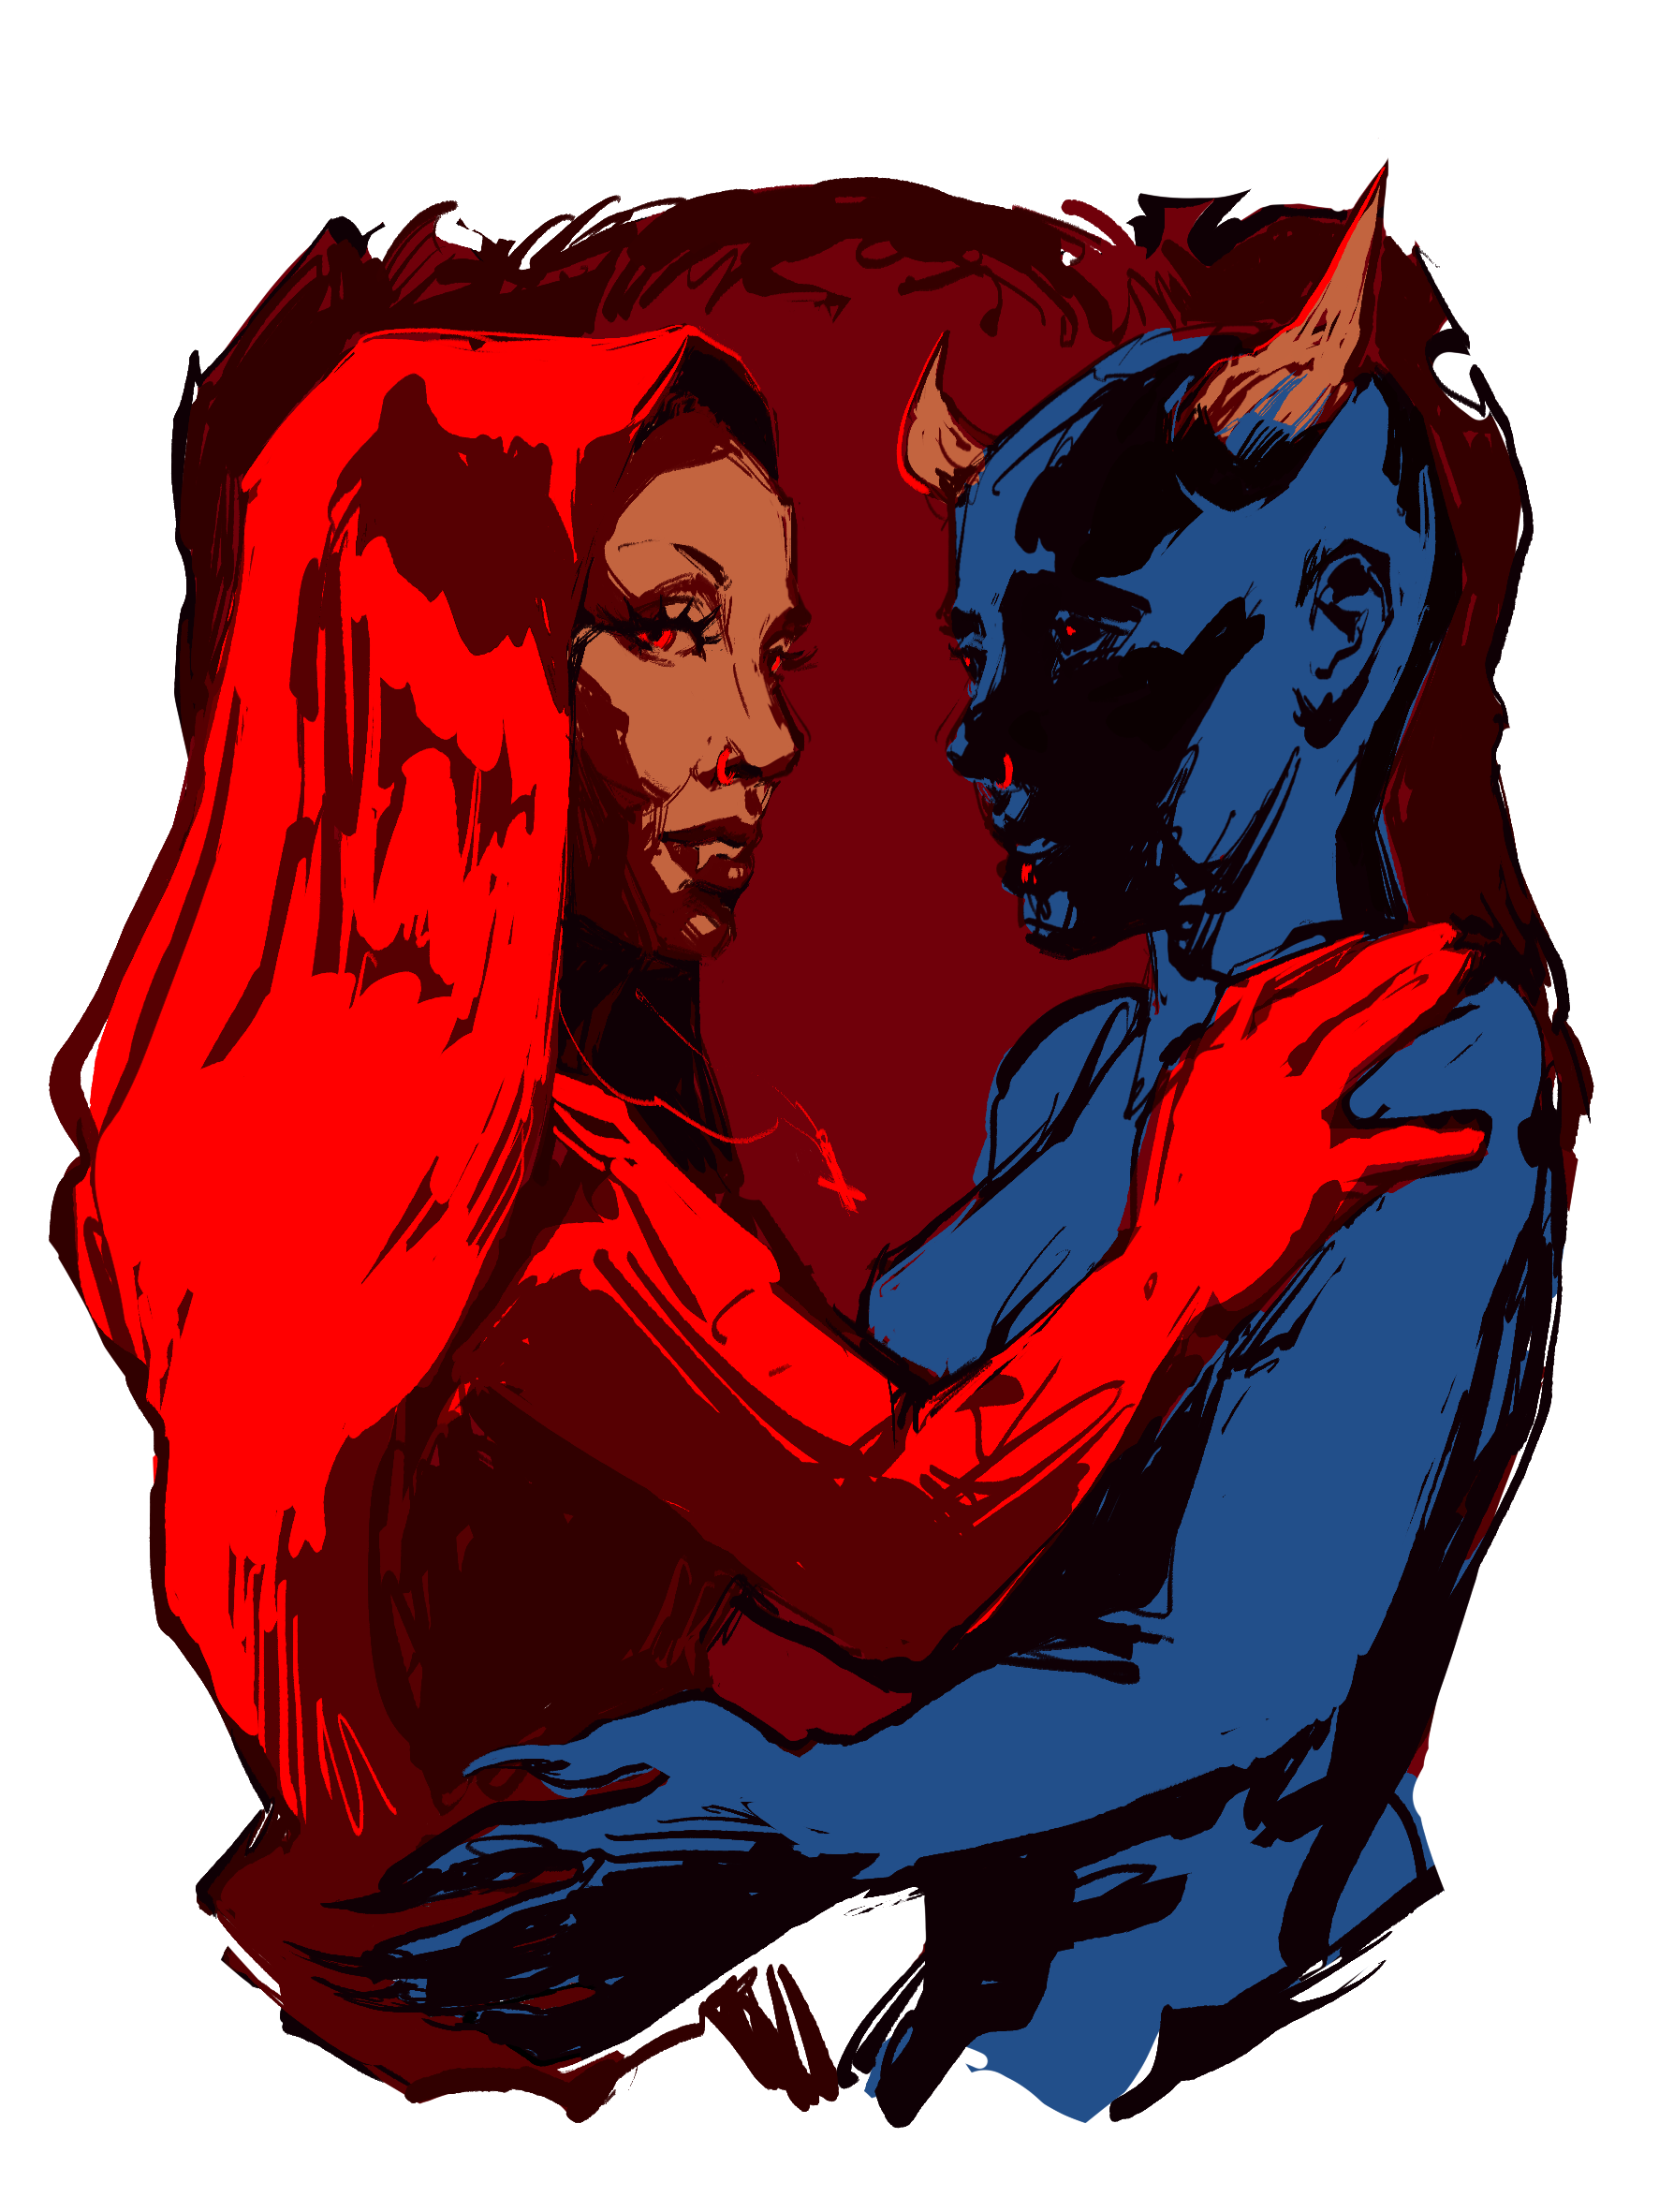 Illustration of Doja Cat embracing a Satanic figure